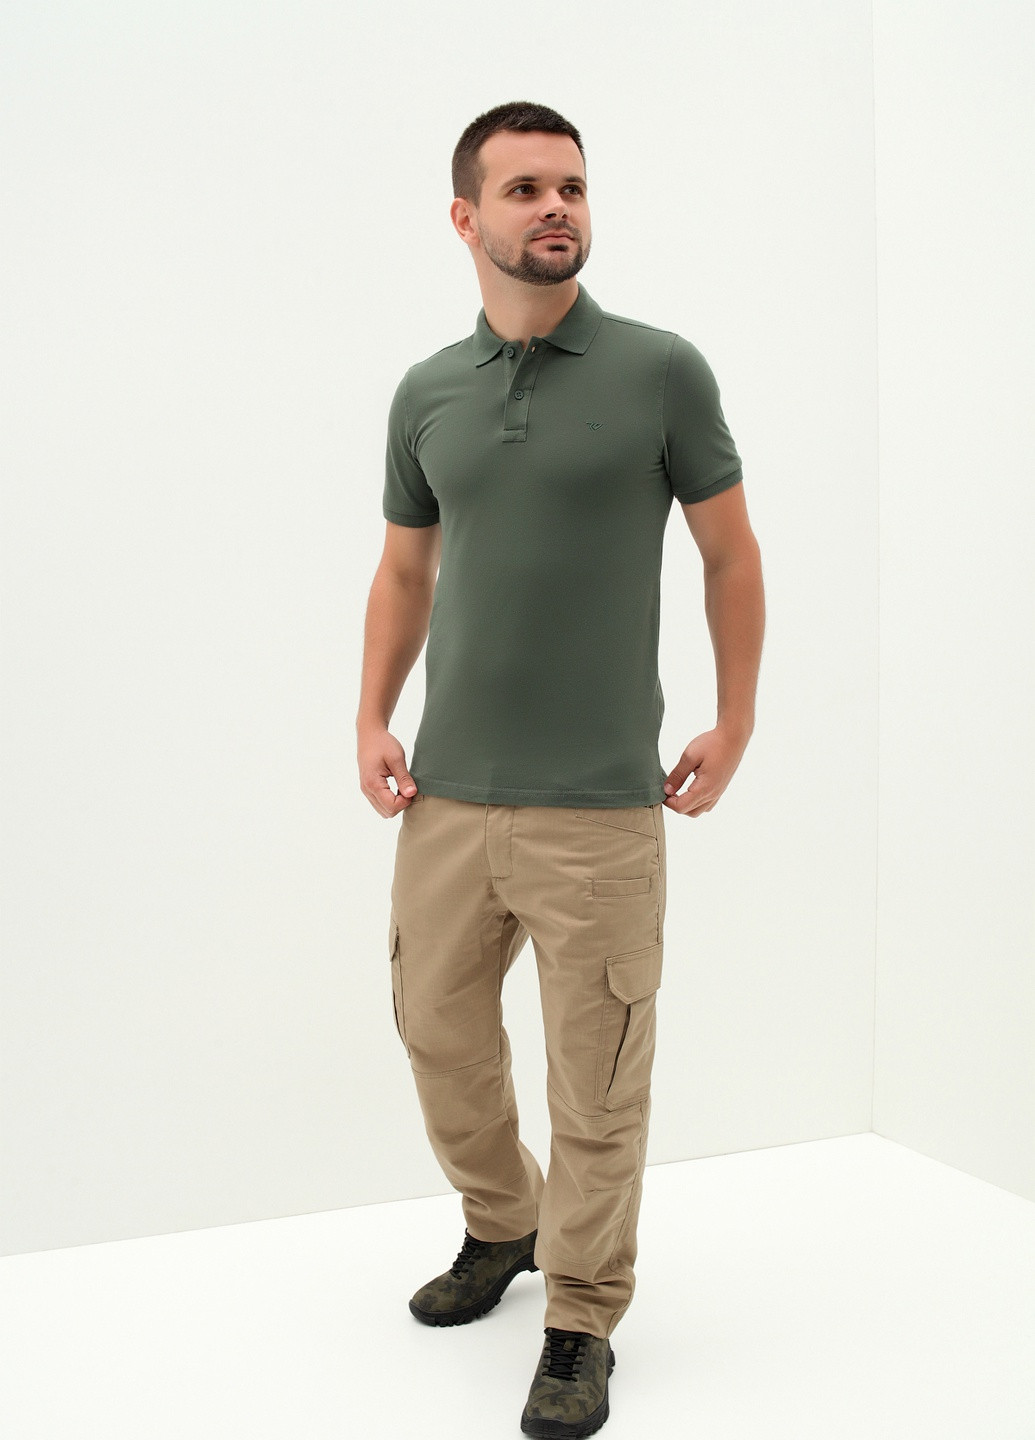 Оливковая (хаки) футболка-поло для мужчин Stendo